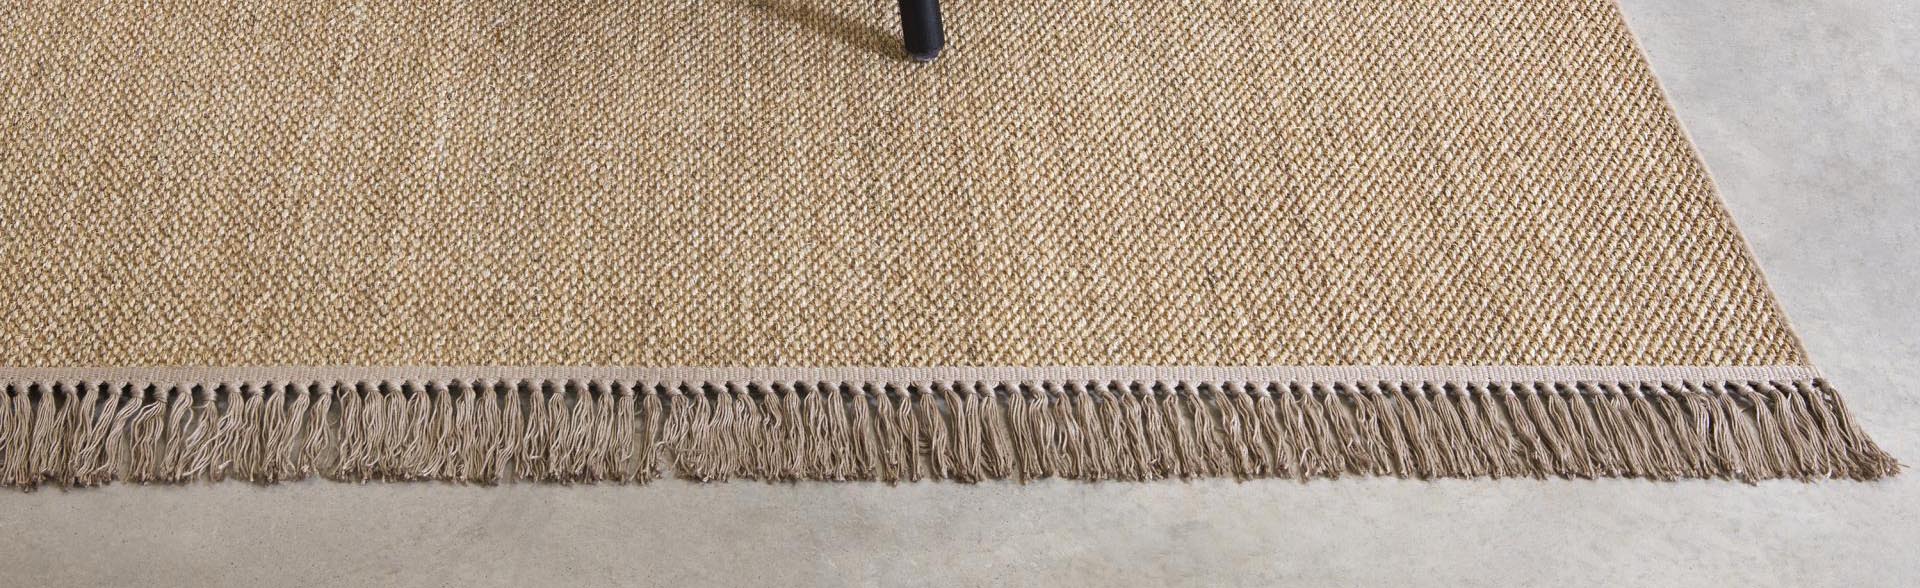  A1HC - Alfombra de sisal y lana, alfombras de fibra